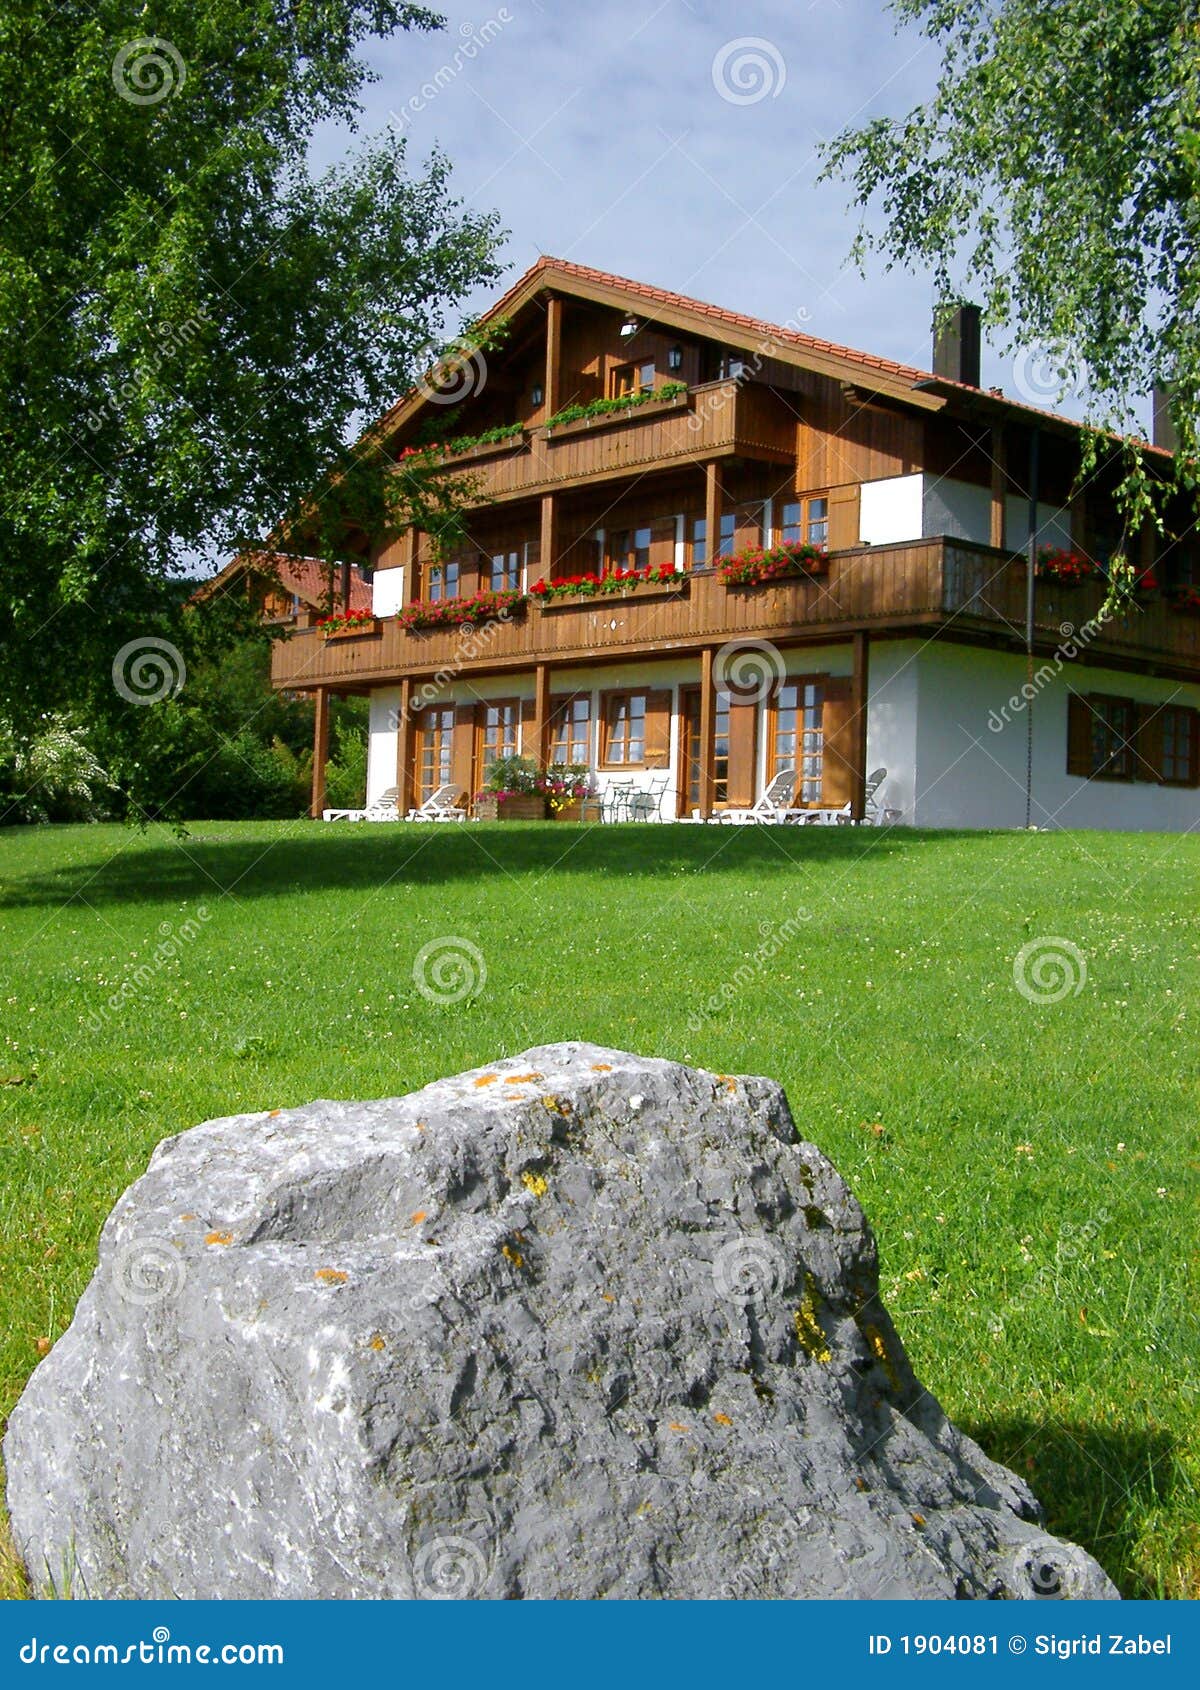 house in bavaria